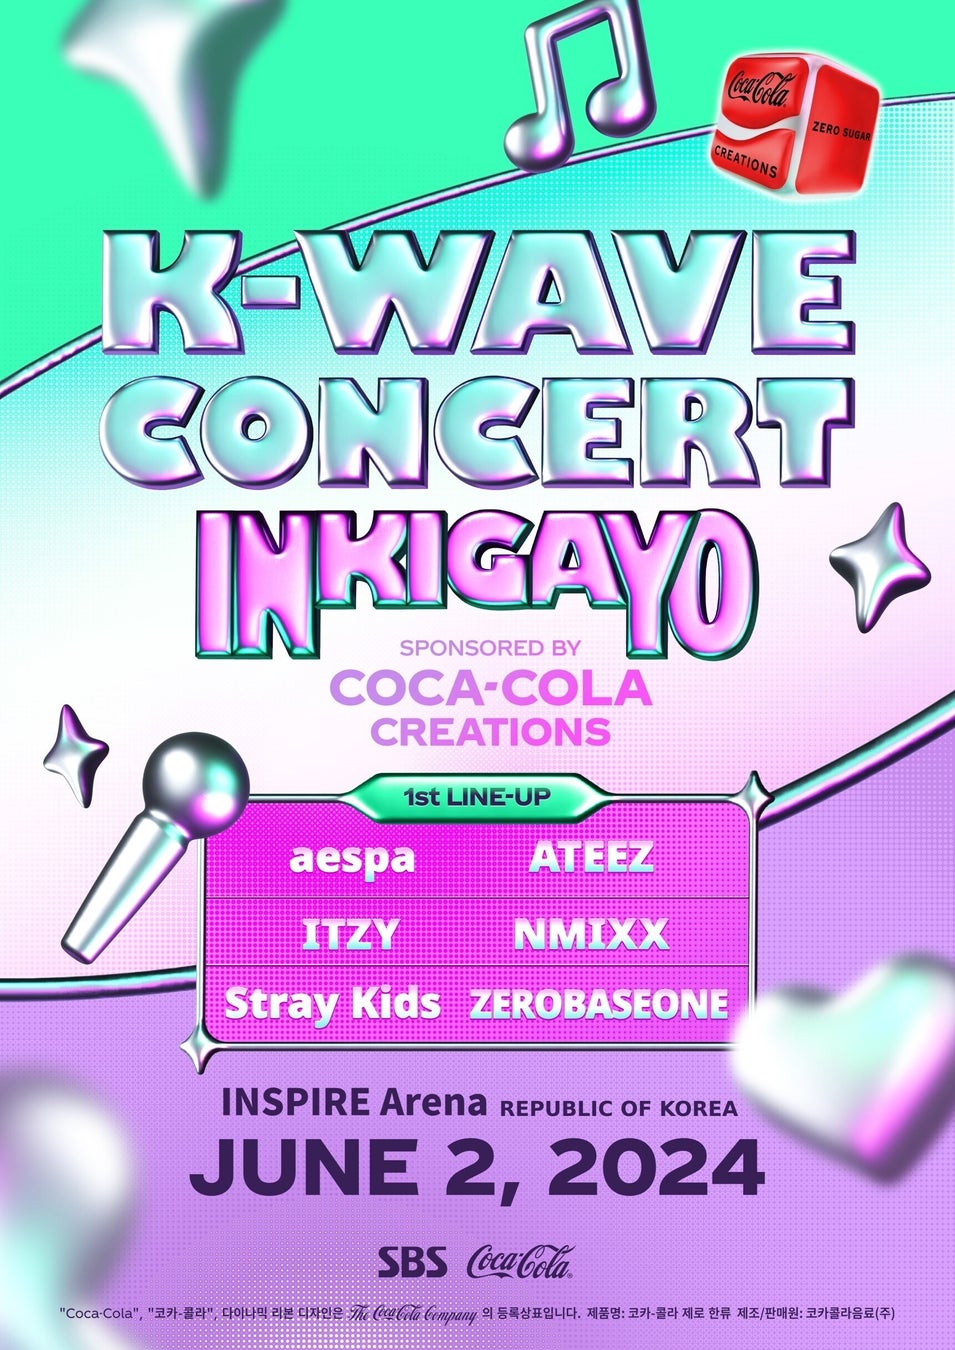 aespa、 ZEROBASEONEなど人気K-POPアイドルが出演決定。『K-Wave コンサート in 韓国』TIGETにてTOUR PACKAGE販売中